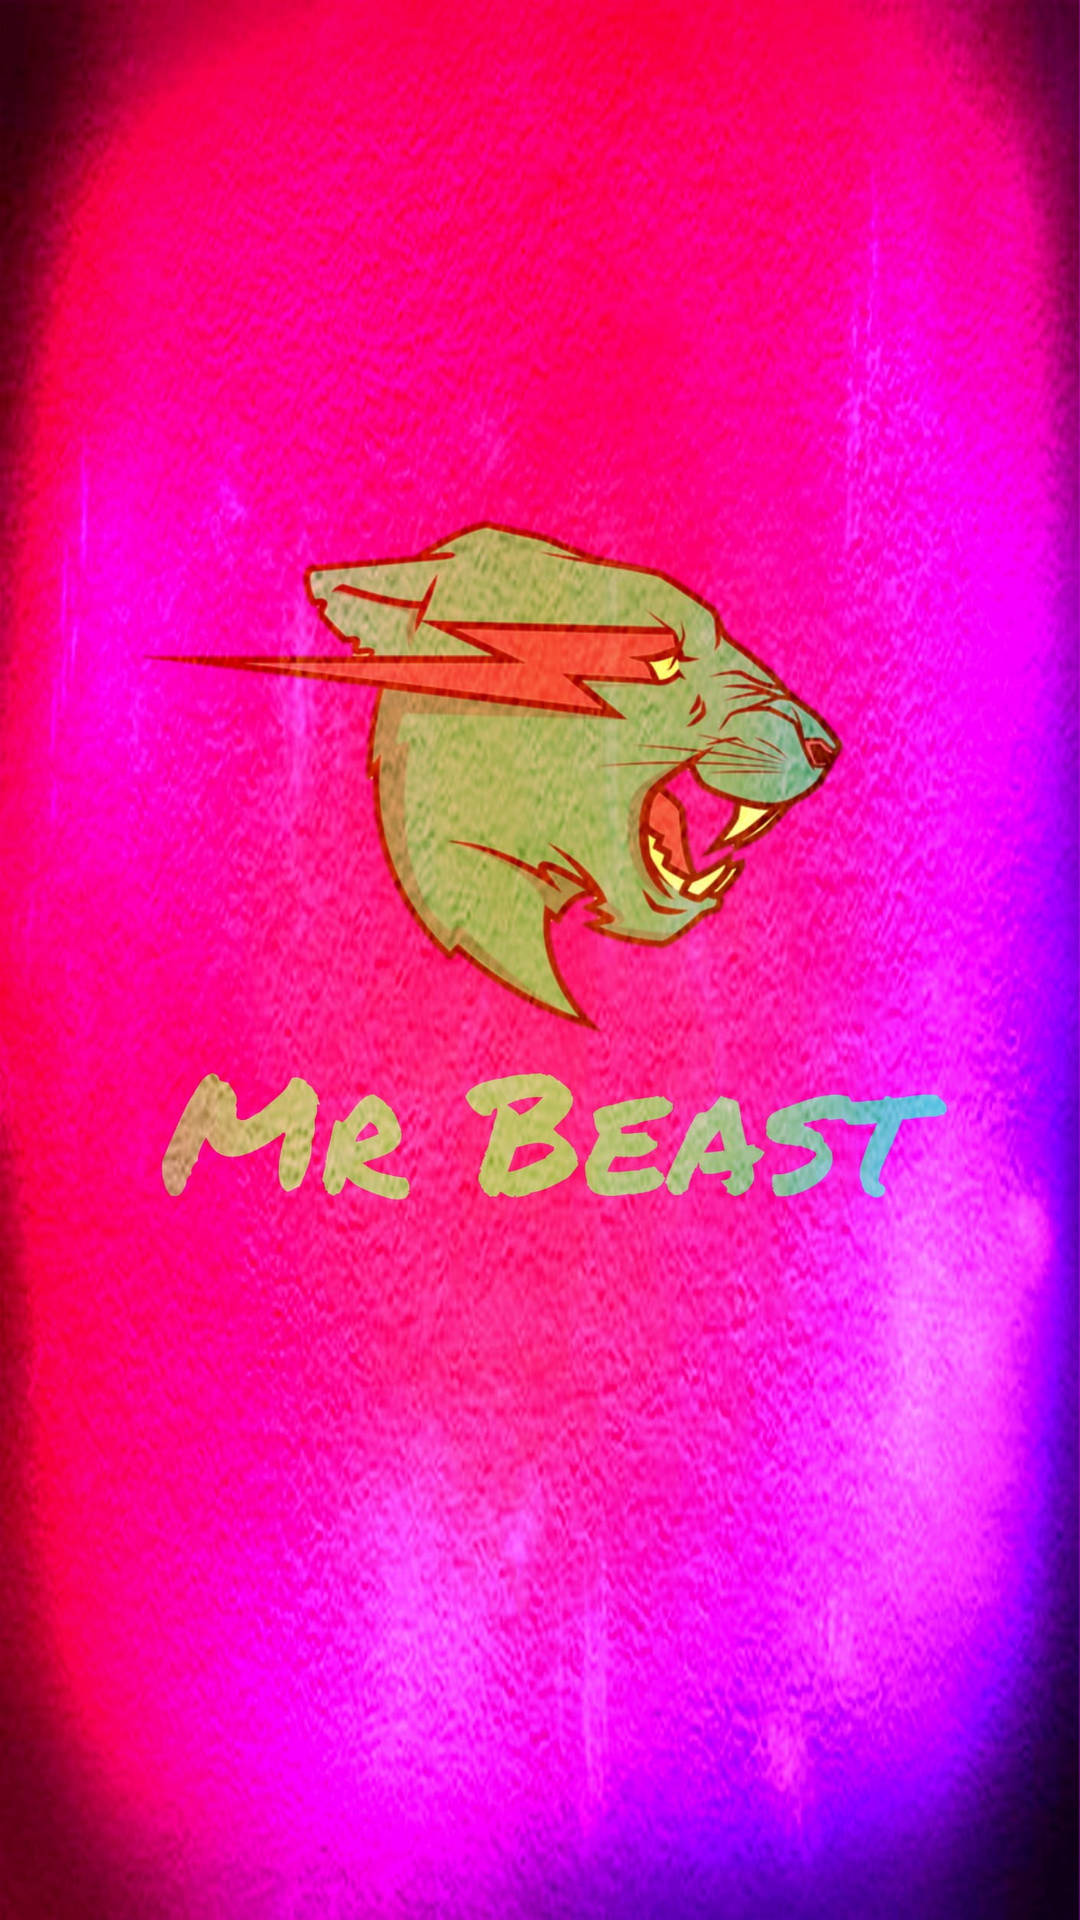 Logode Mr Beast En Rosa Intenso Fondo de pantalla